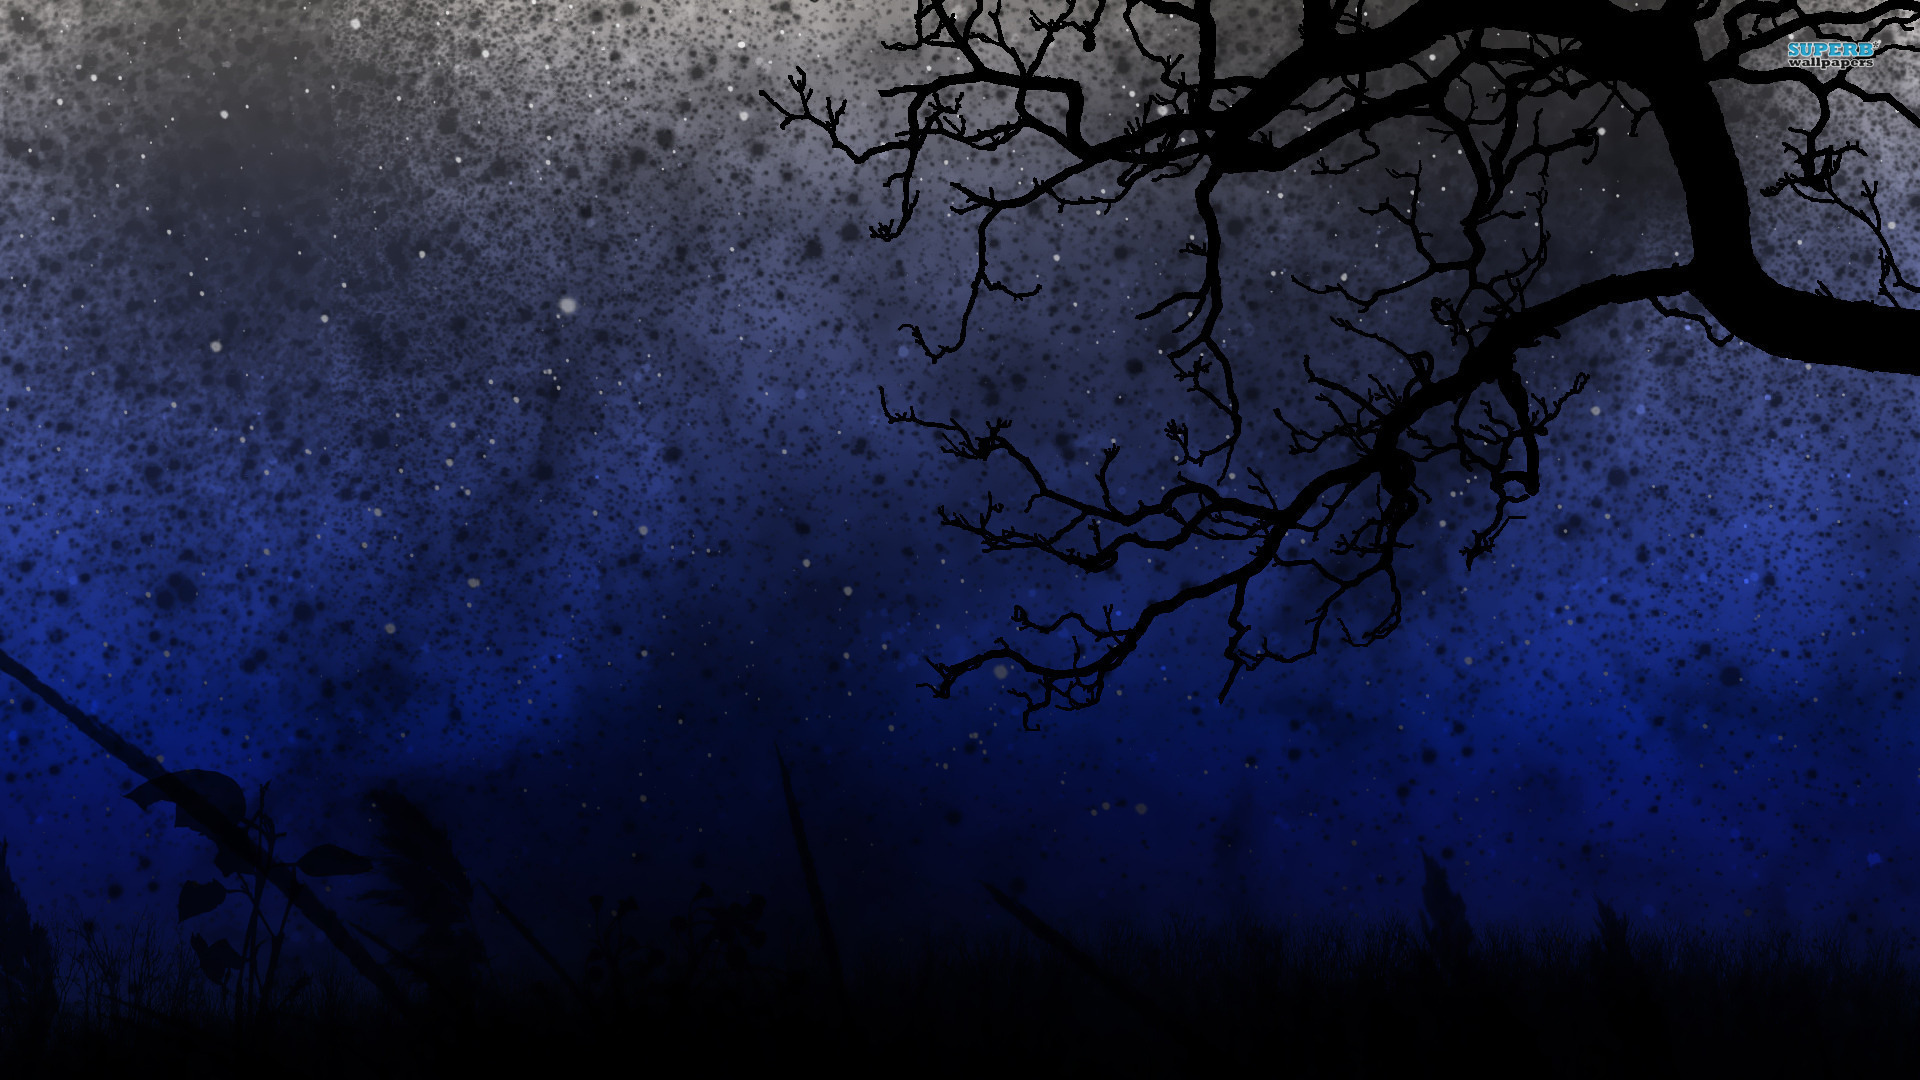 Sky Digital Art Starry Night With Resolutions Pixel